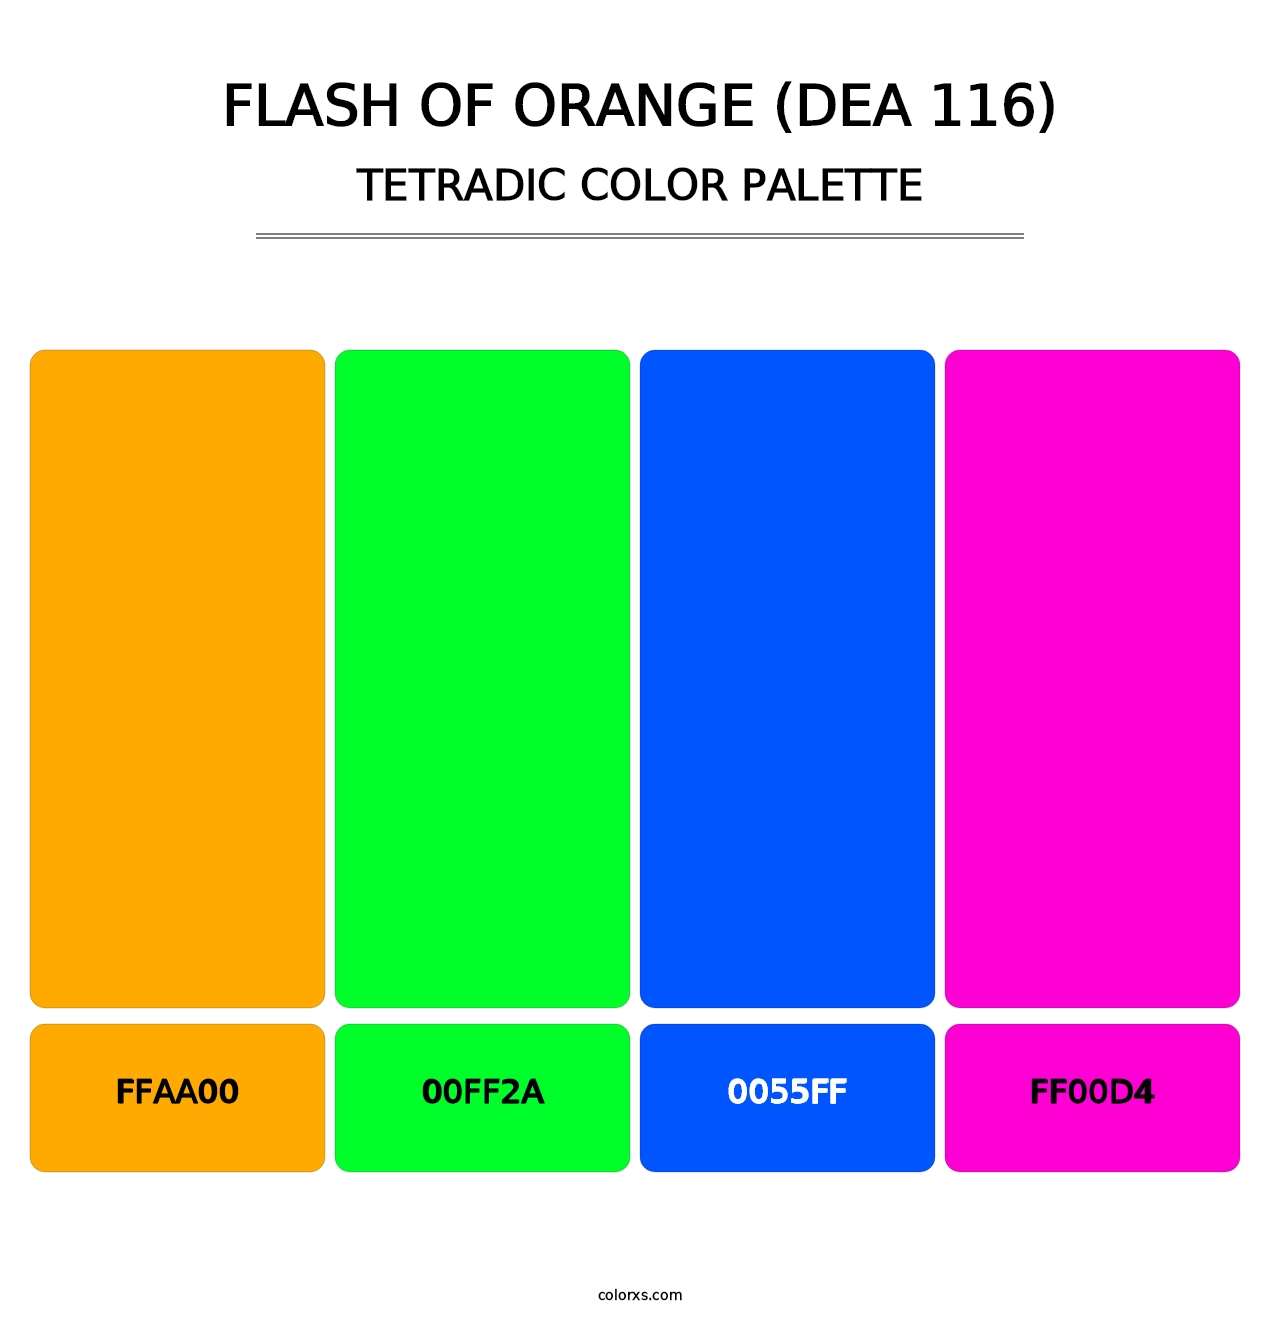 Flash of Orange (DEA 116) - Tetradic Color Palette